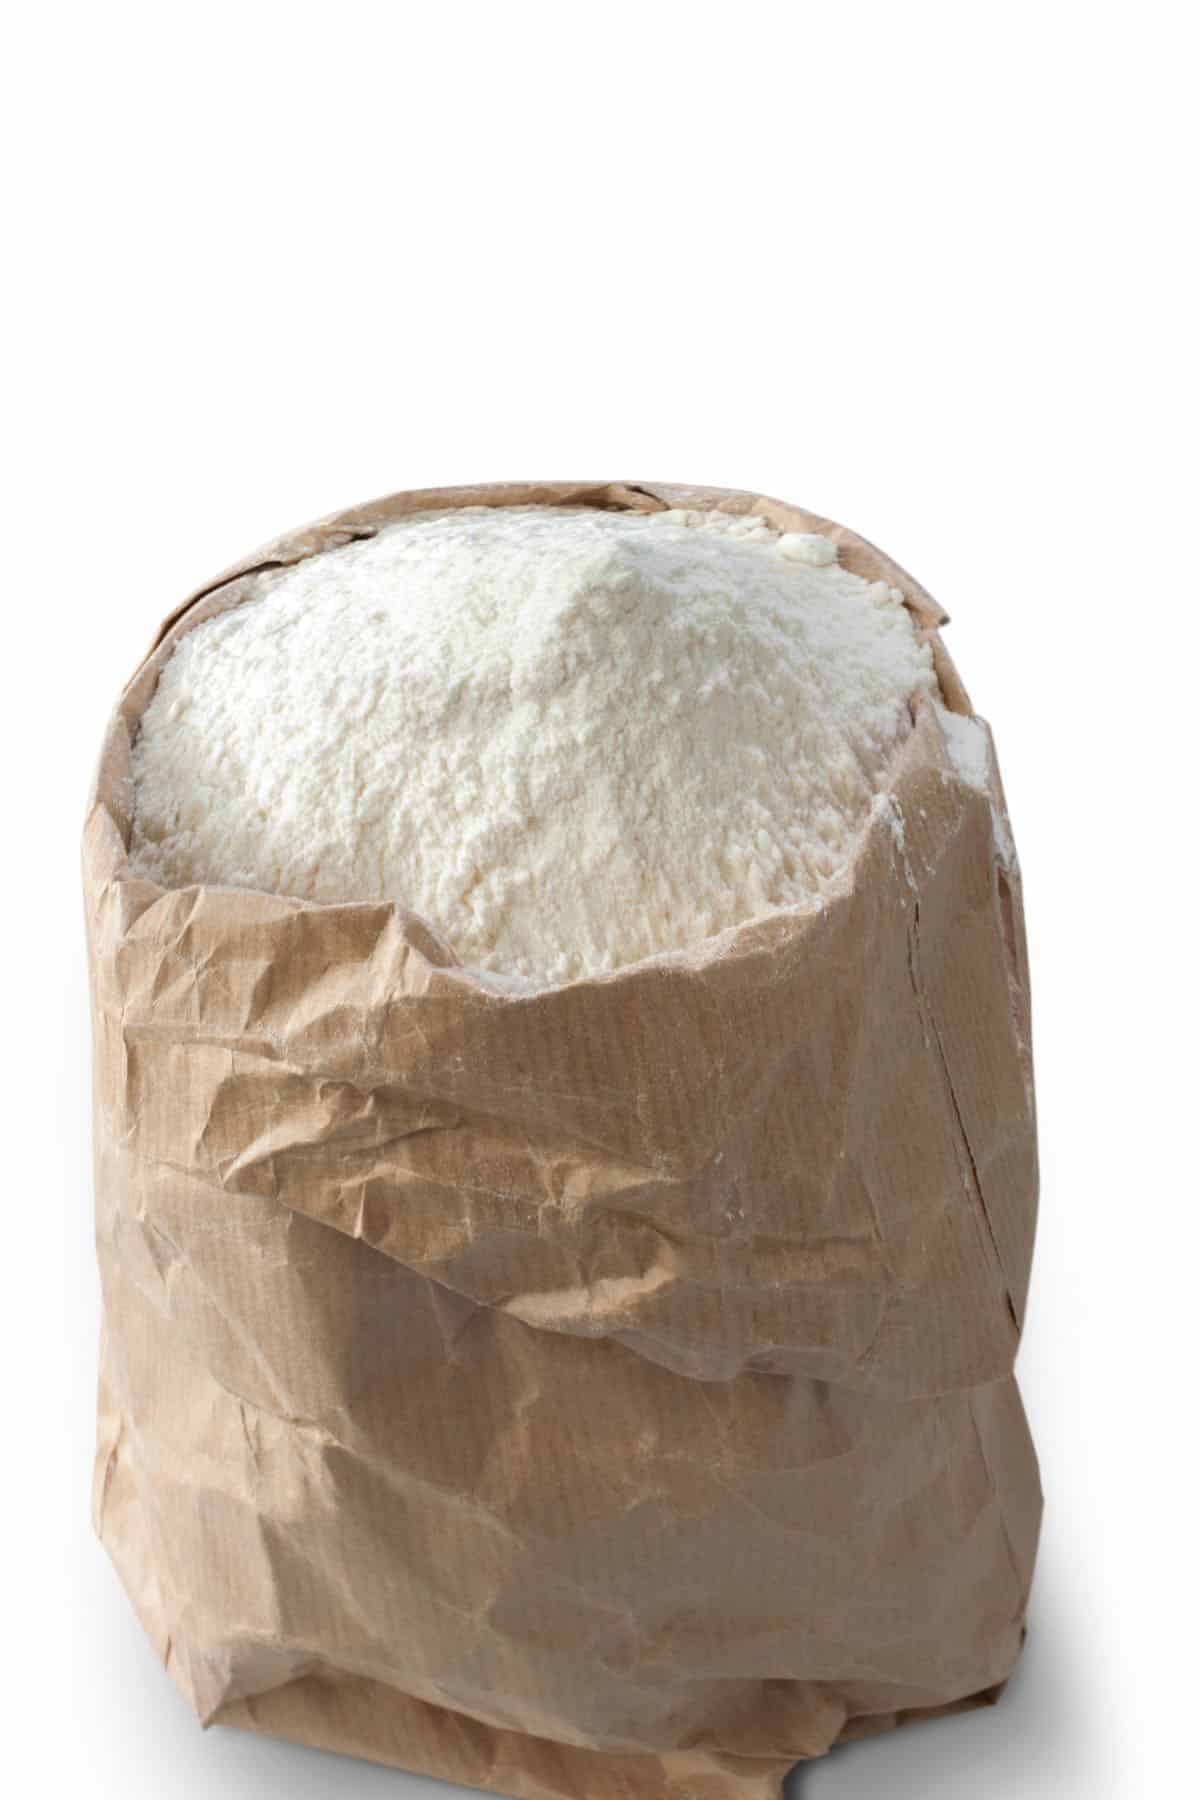 Flour in a paper bag.